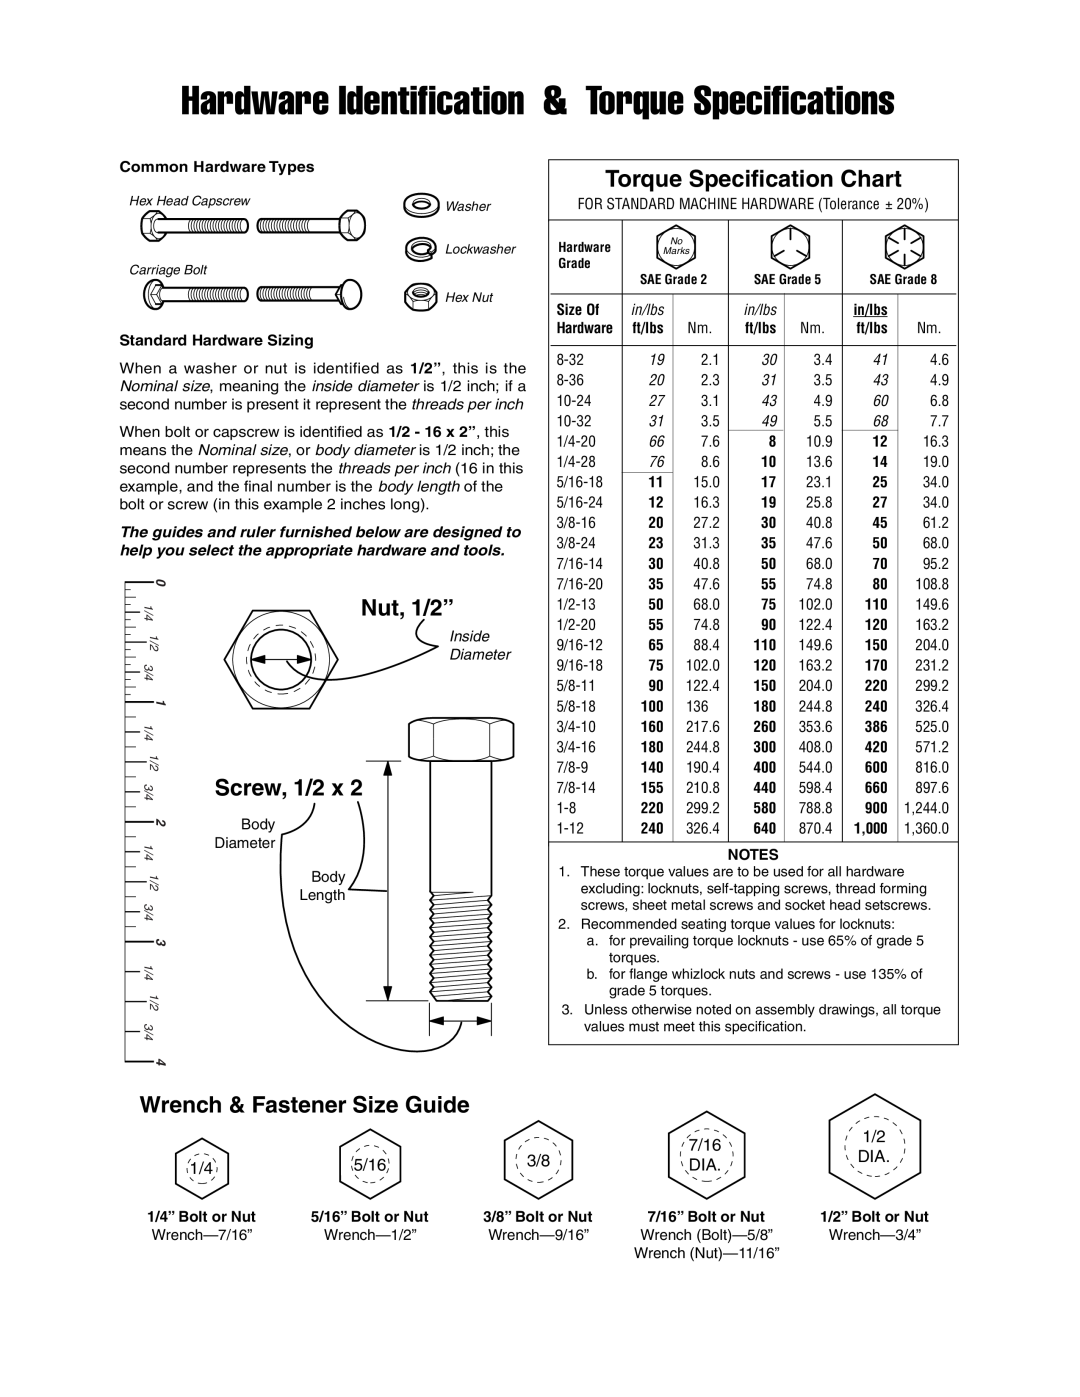 Simplicity Baron / 2400 Hardware Identification & Torque Specifications, Torque Specification Chart, Nut, 1/2”, 7/16, 5/16 